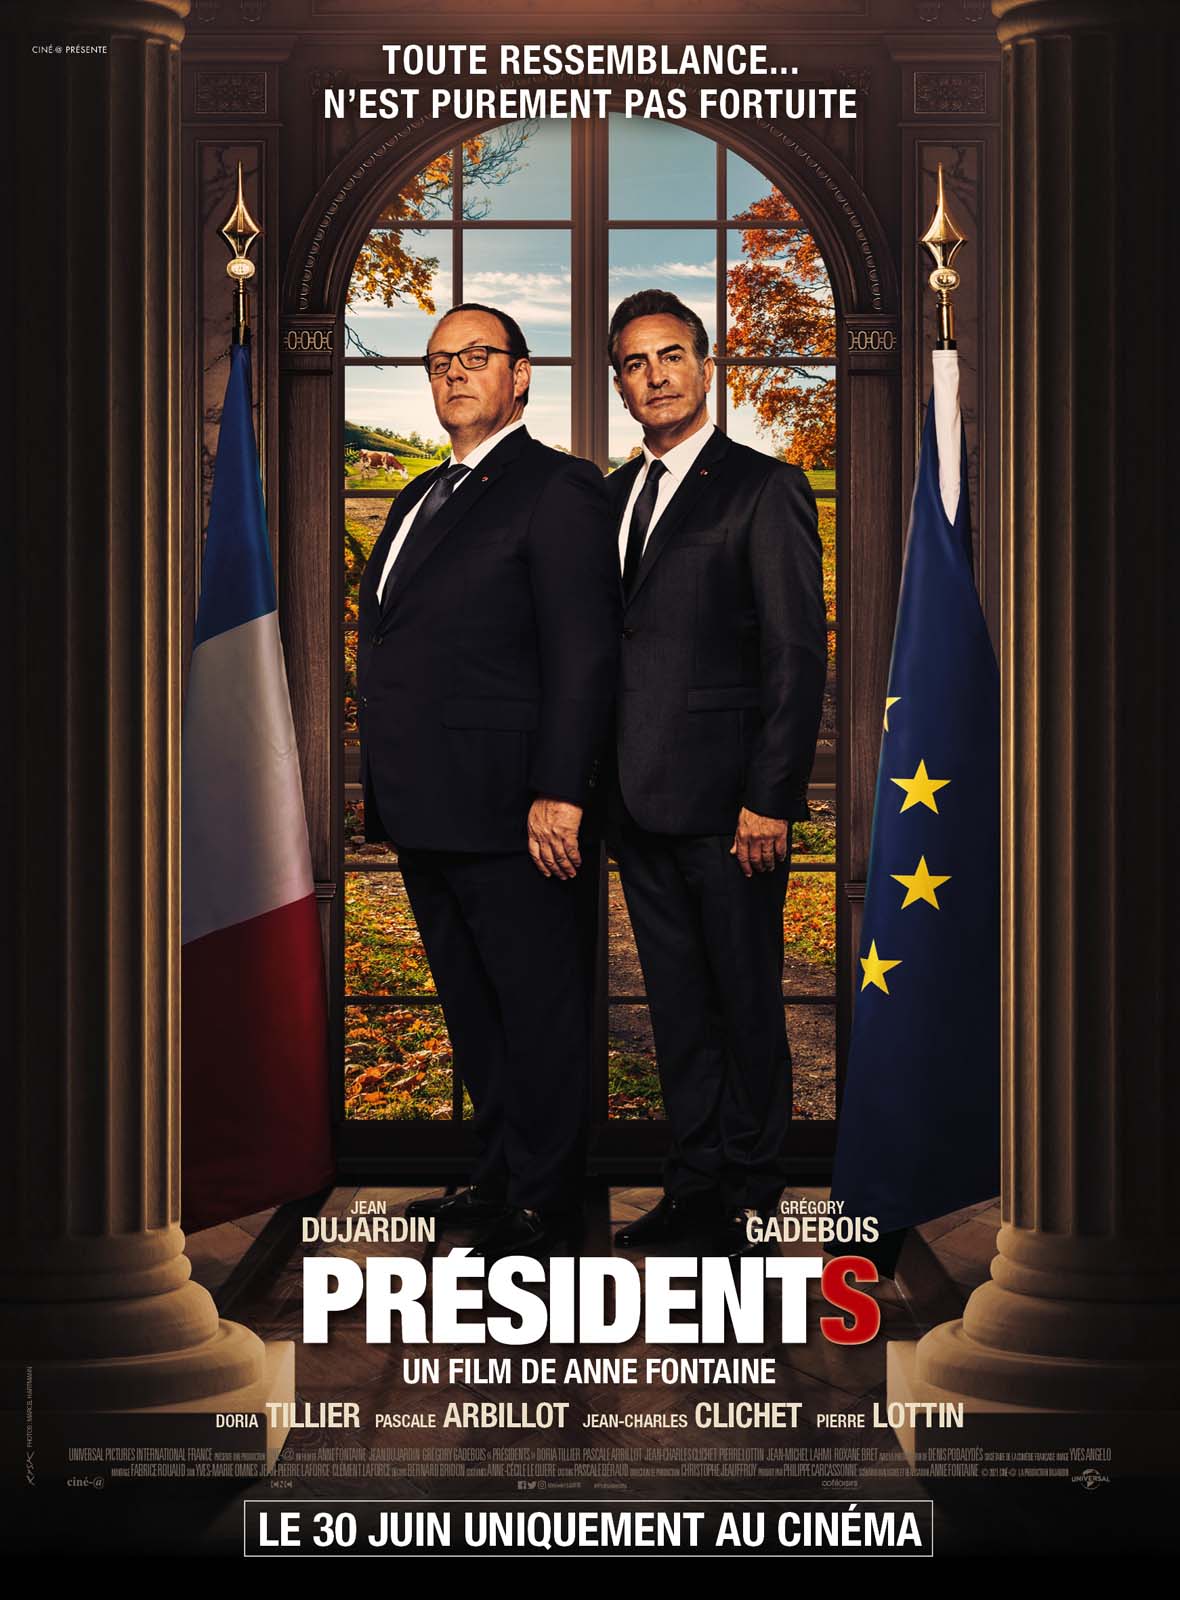 Nicolas Sarkozy : François Hollande fait de surprenantes déclarations sur son rival...